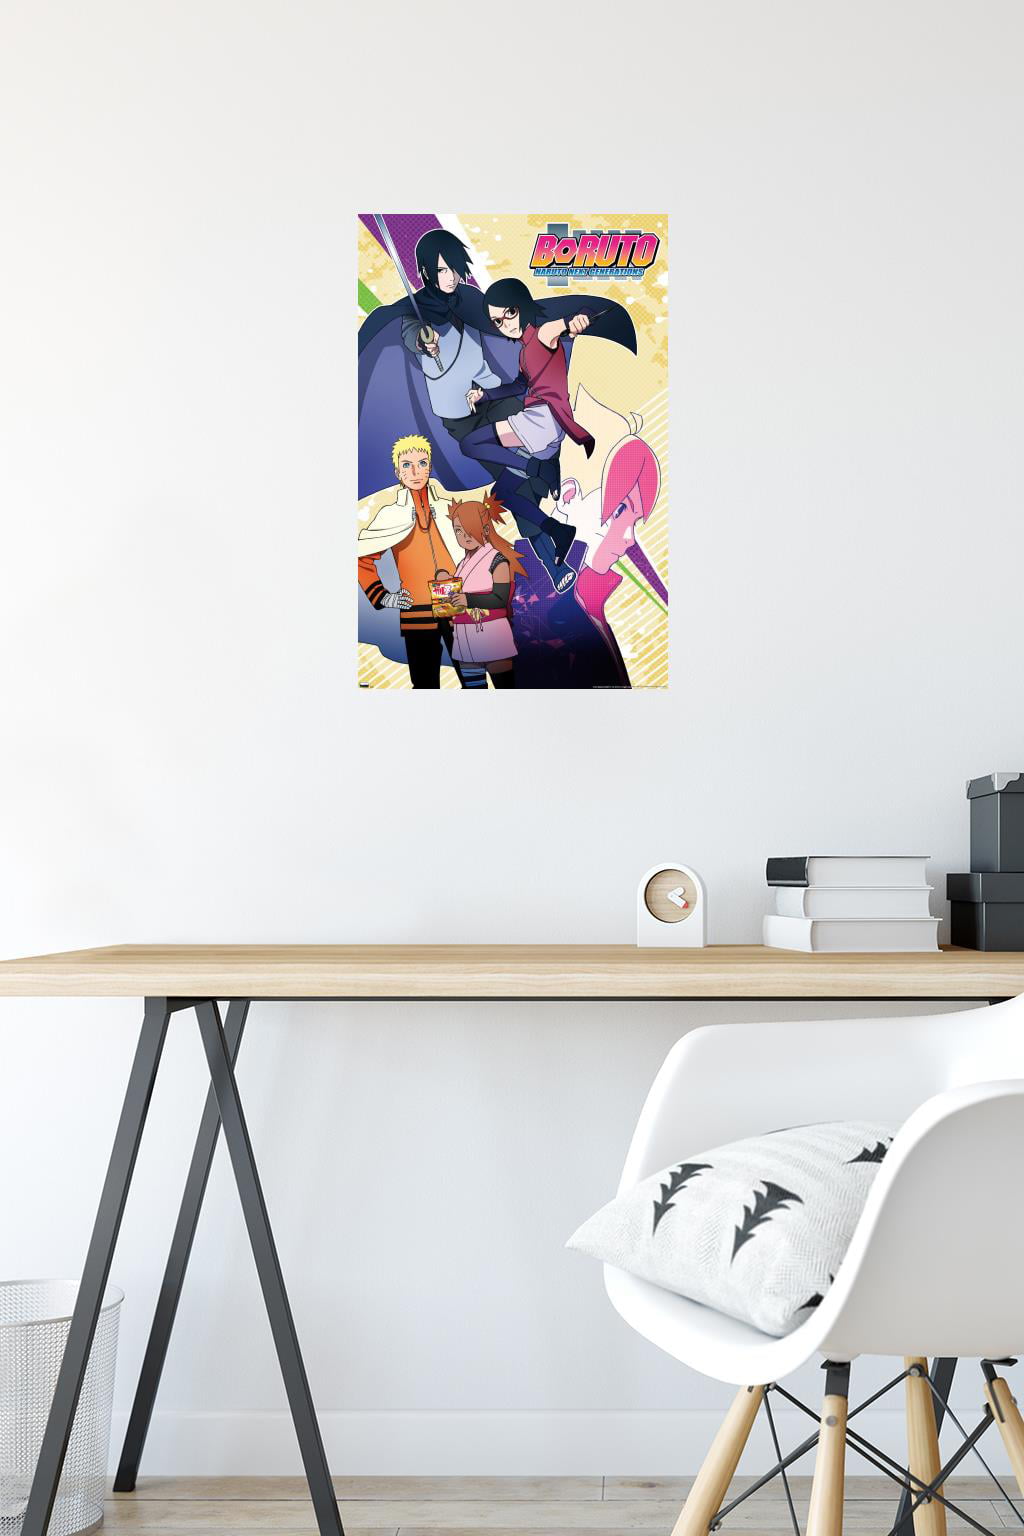 Boruto: Naruto Next Generations - Group Wall Poster, 22.375 x 34 